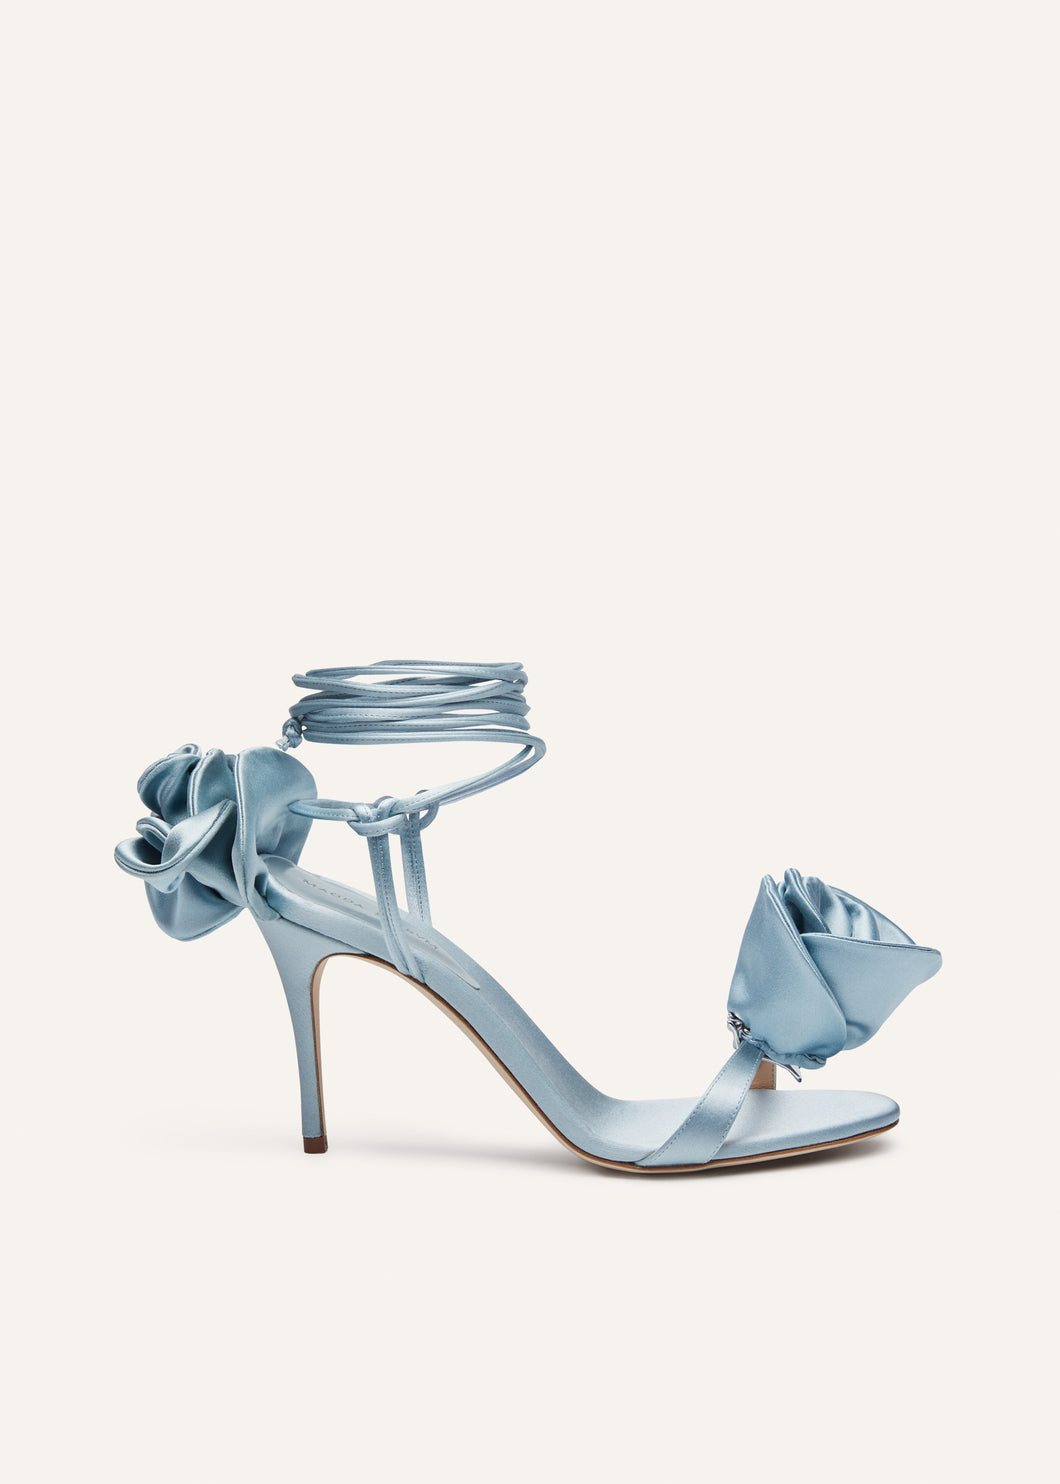 Double flower heel sandals in blue